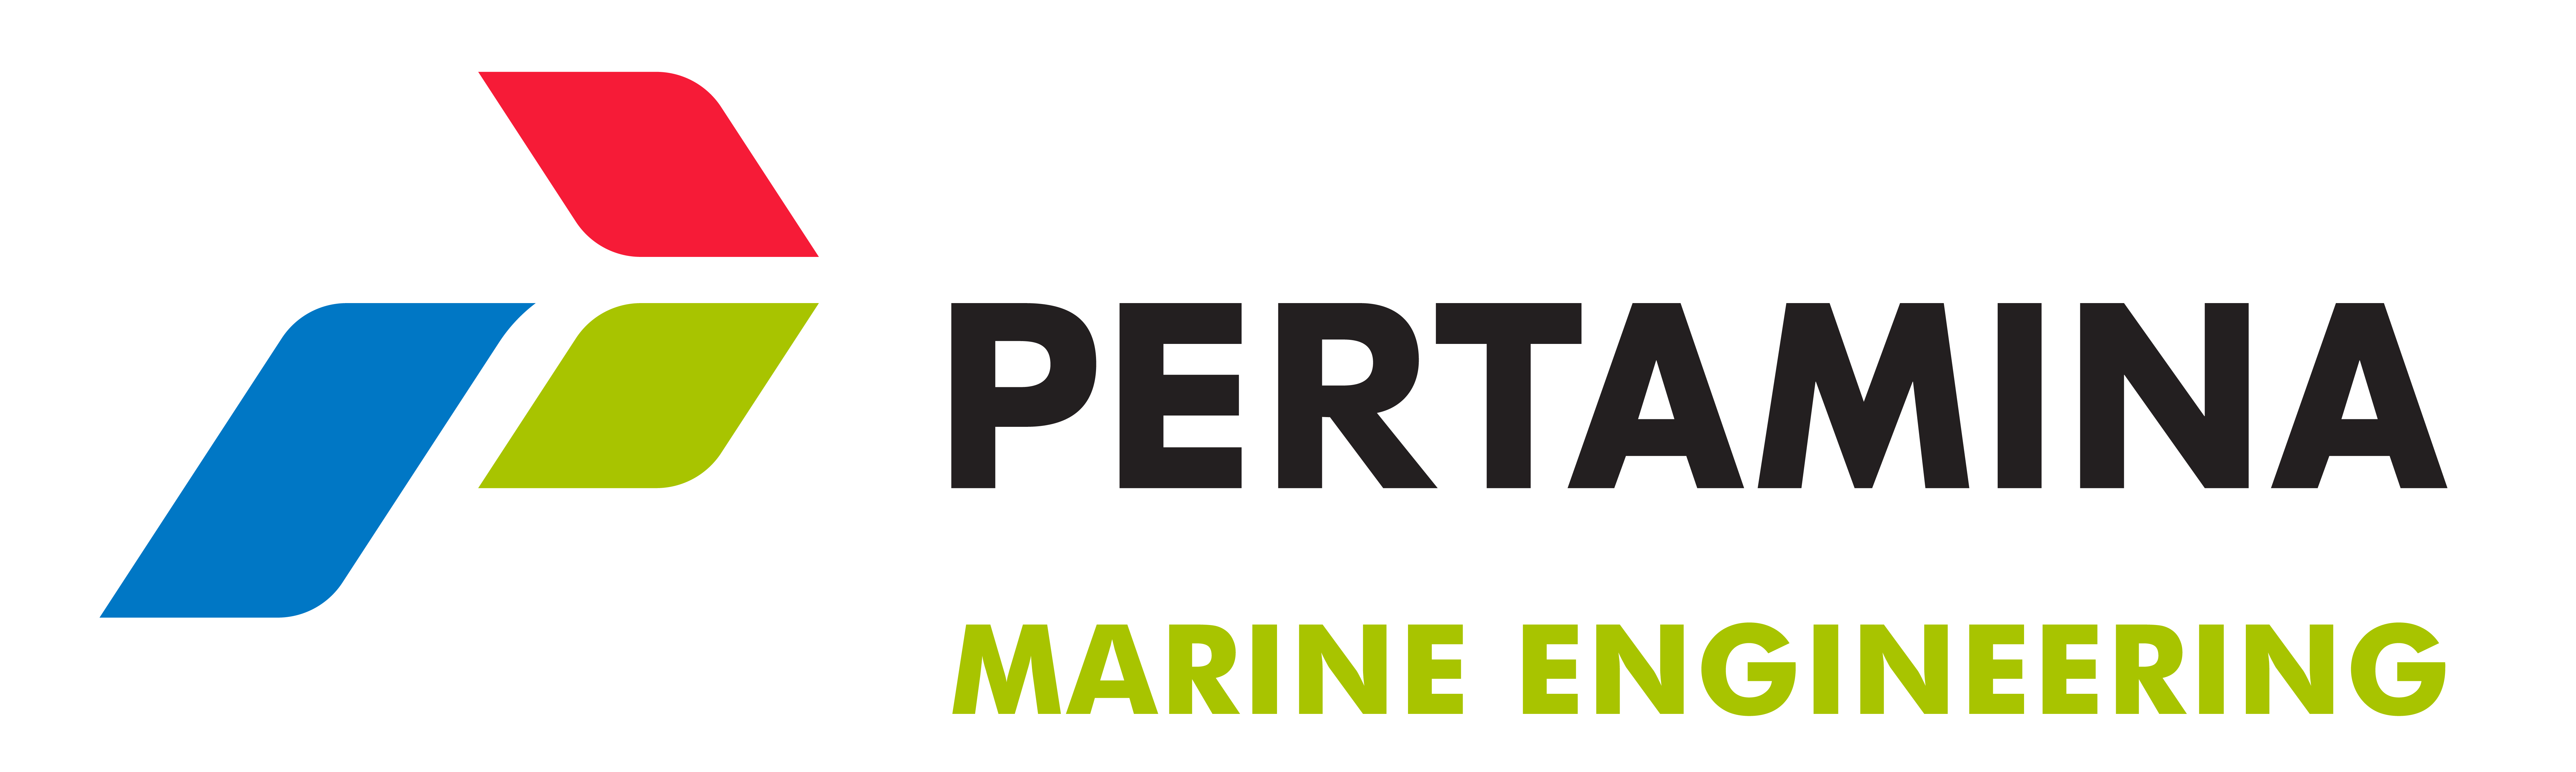 Pertamina Marine Engineering